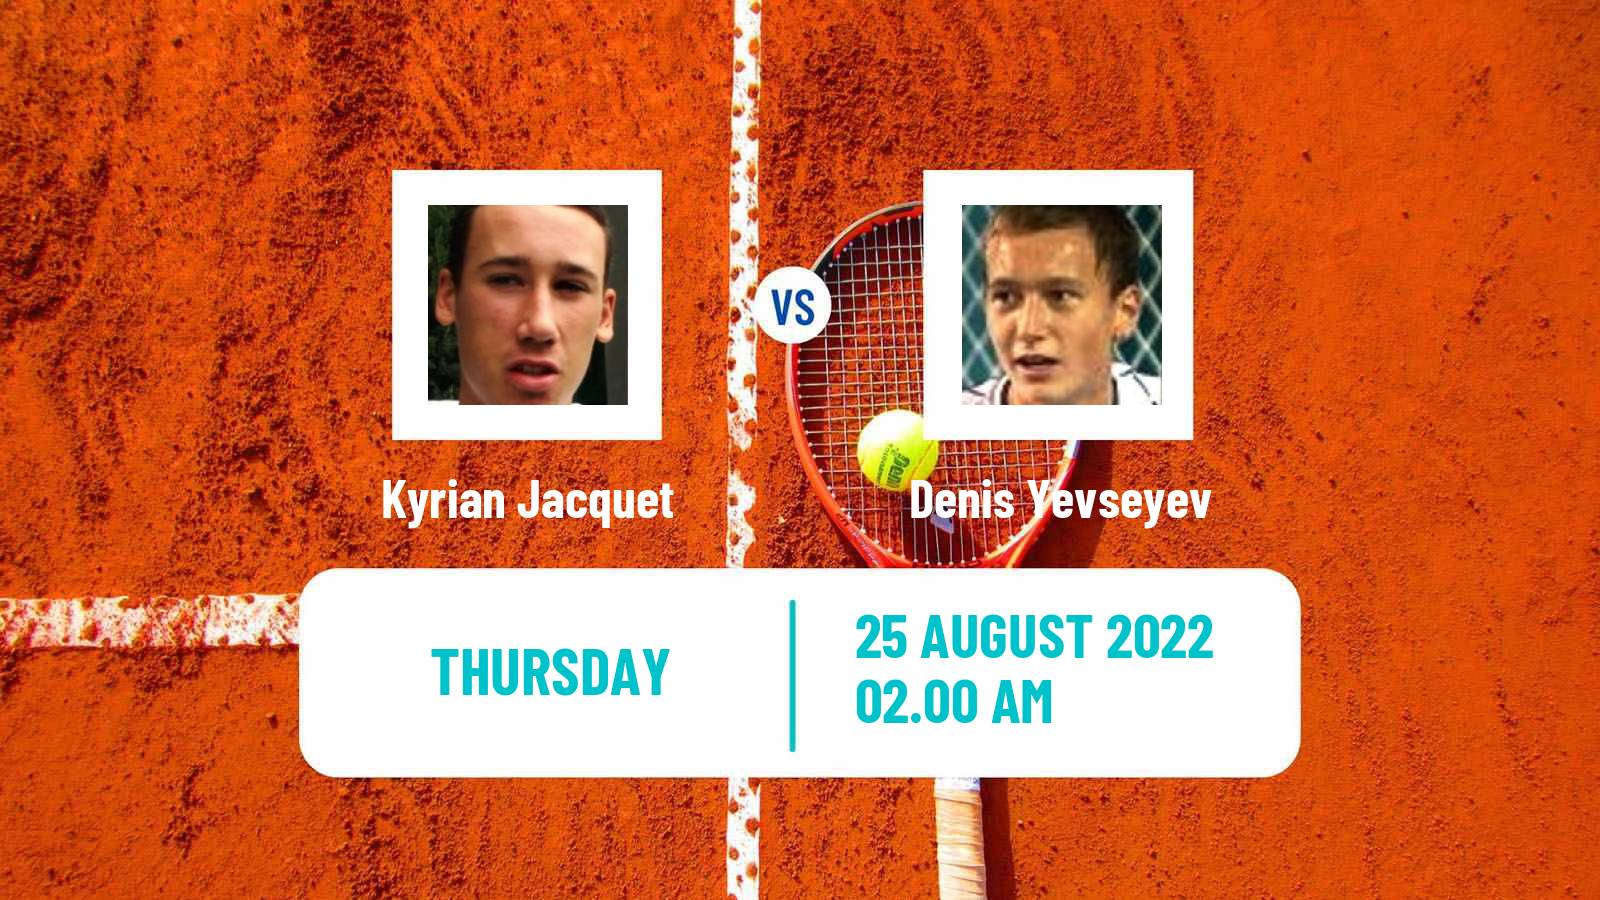 Tennis ATP Challenger Kyrian Jacquet - Denis Yevseyev